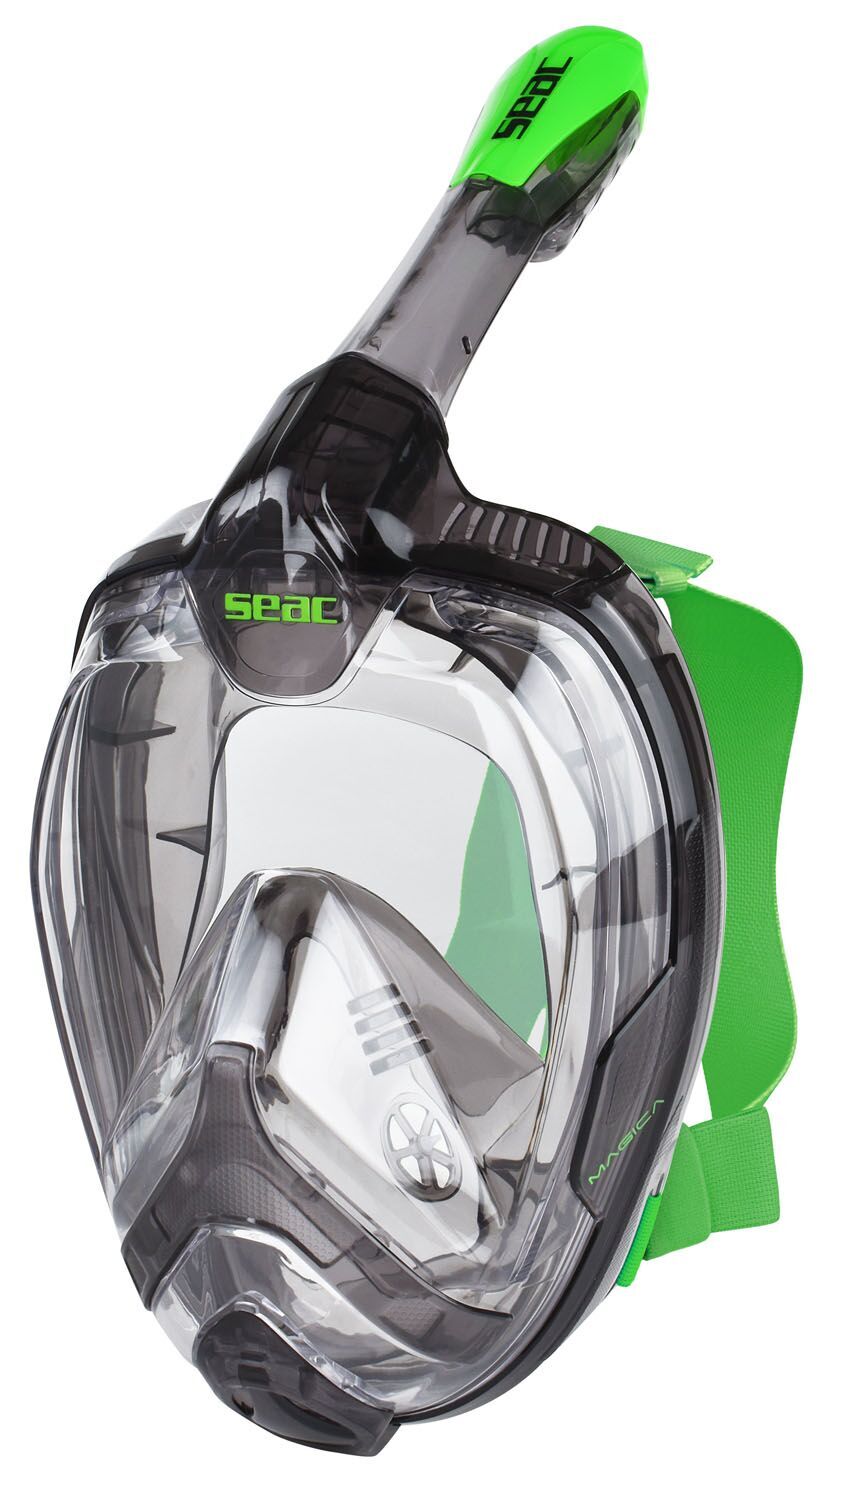 Seac Sub Magica Snorkeling Mask - XL in Green